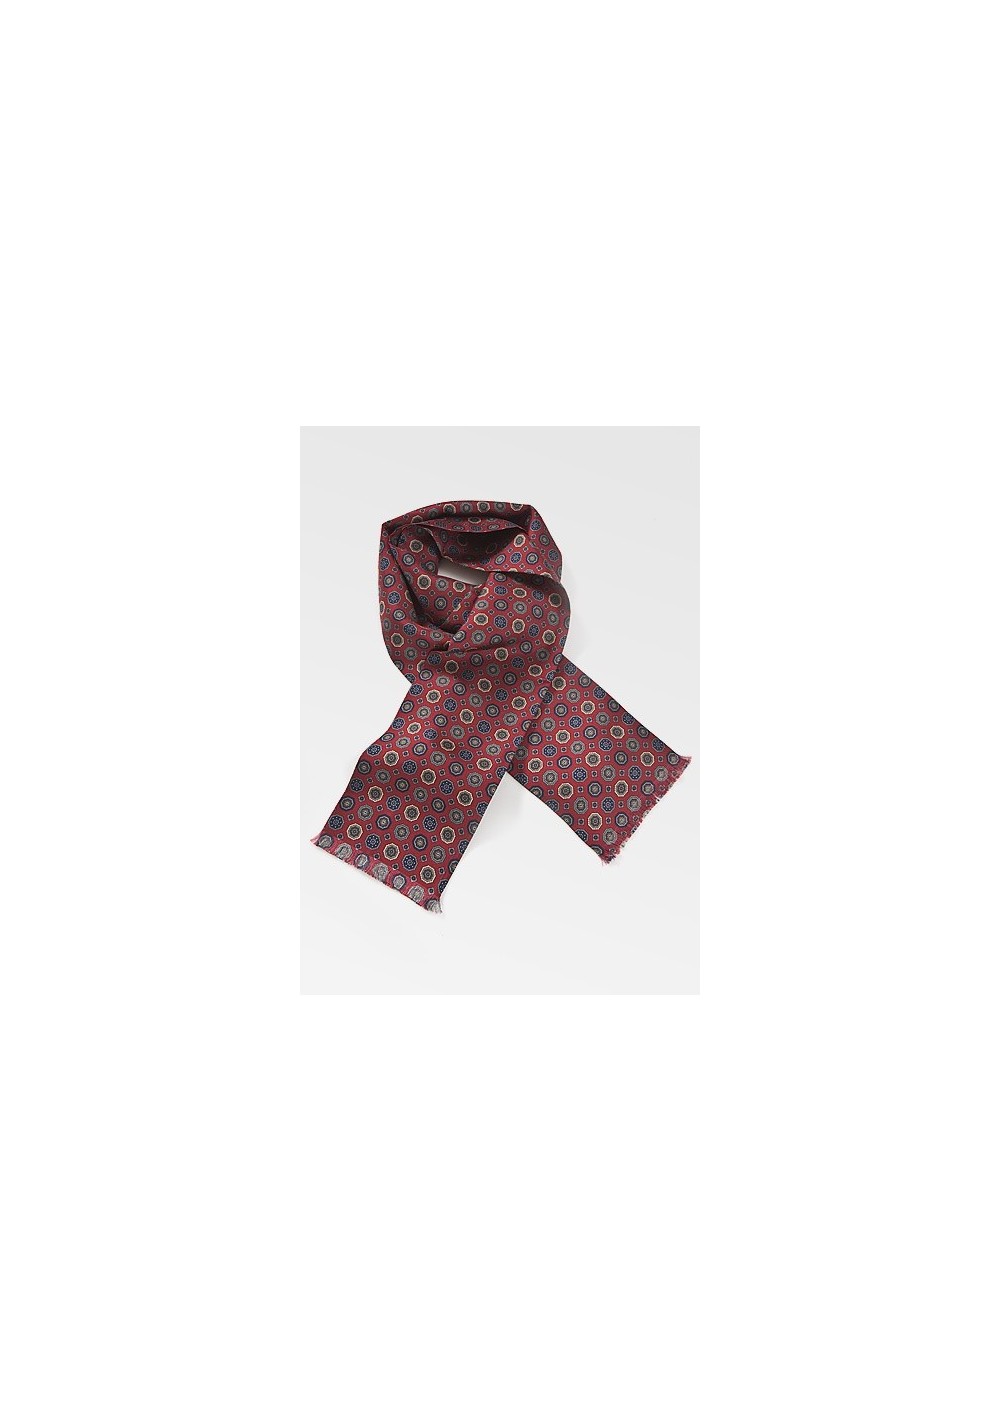 Fashionable Patterned Silk Scarf in Merlots